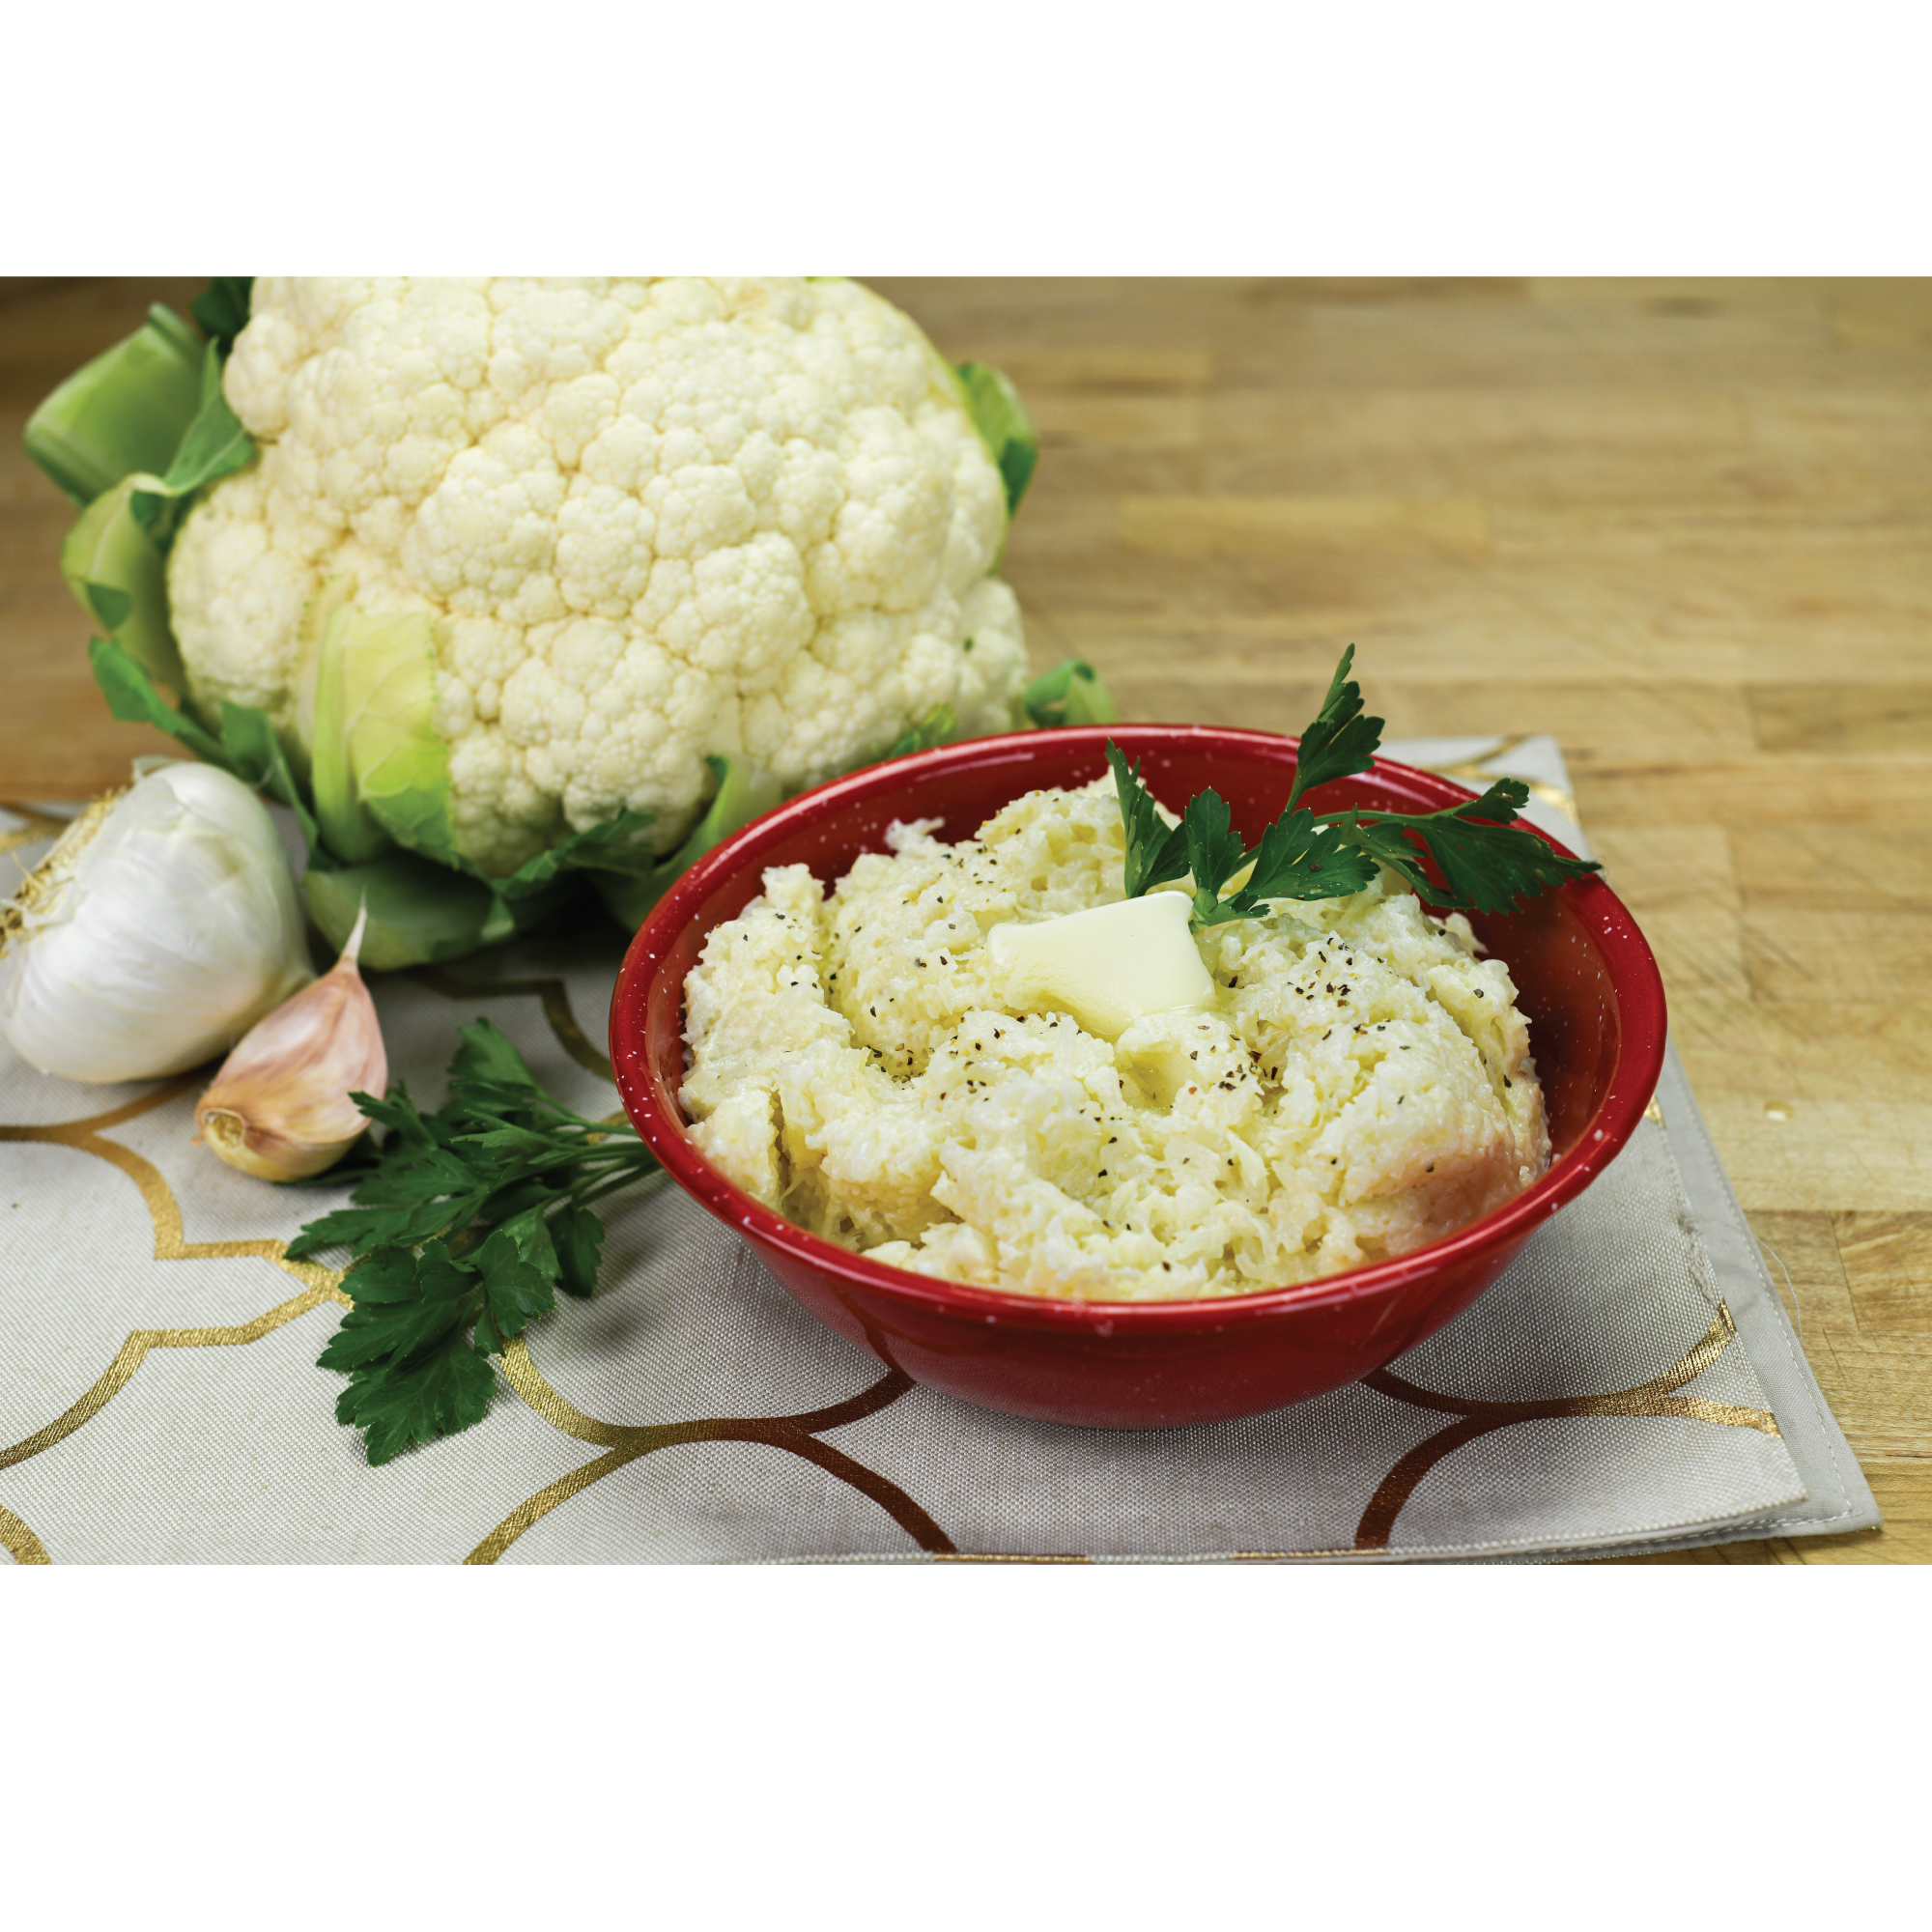 Mashed Cauliflower "Potatoes"